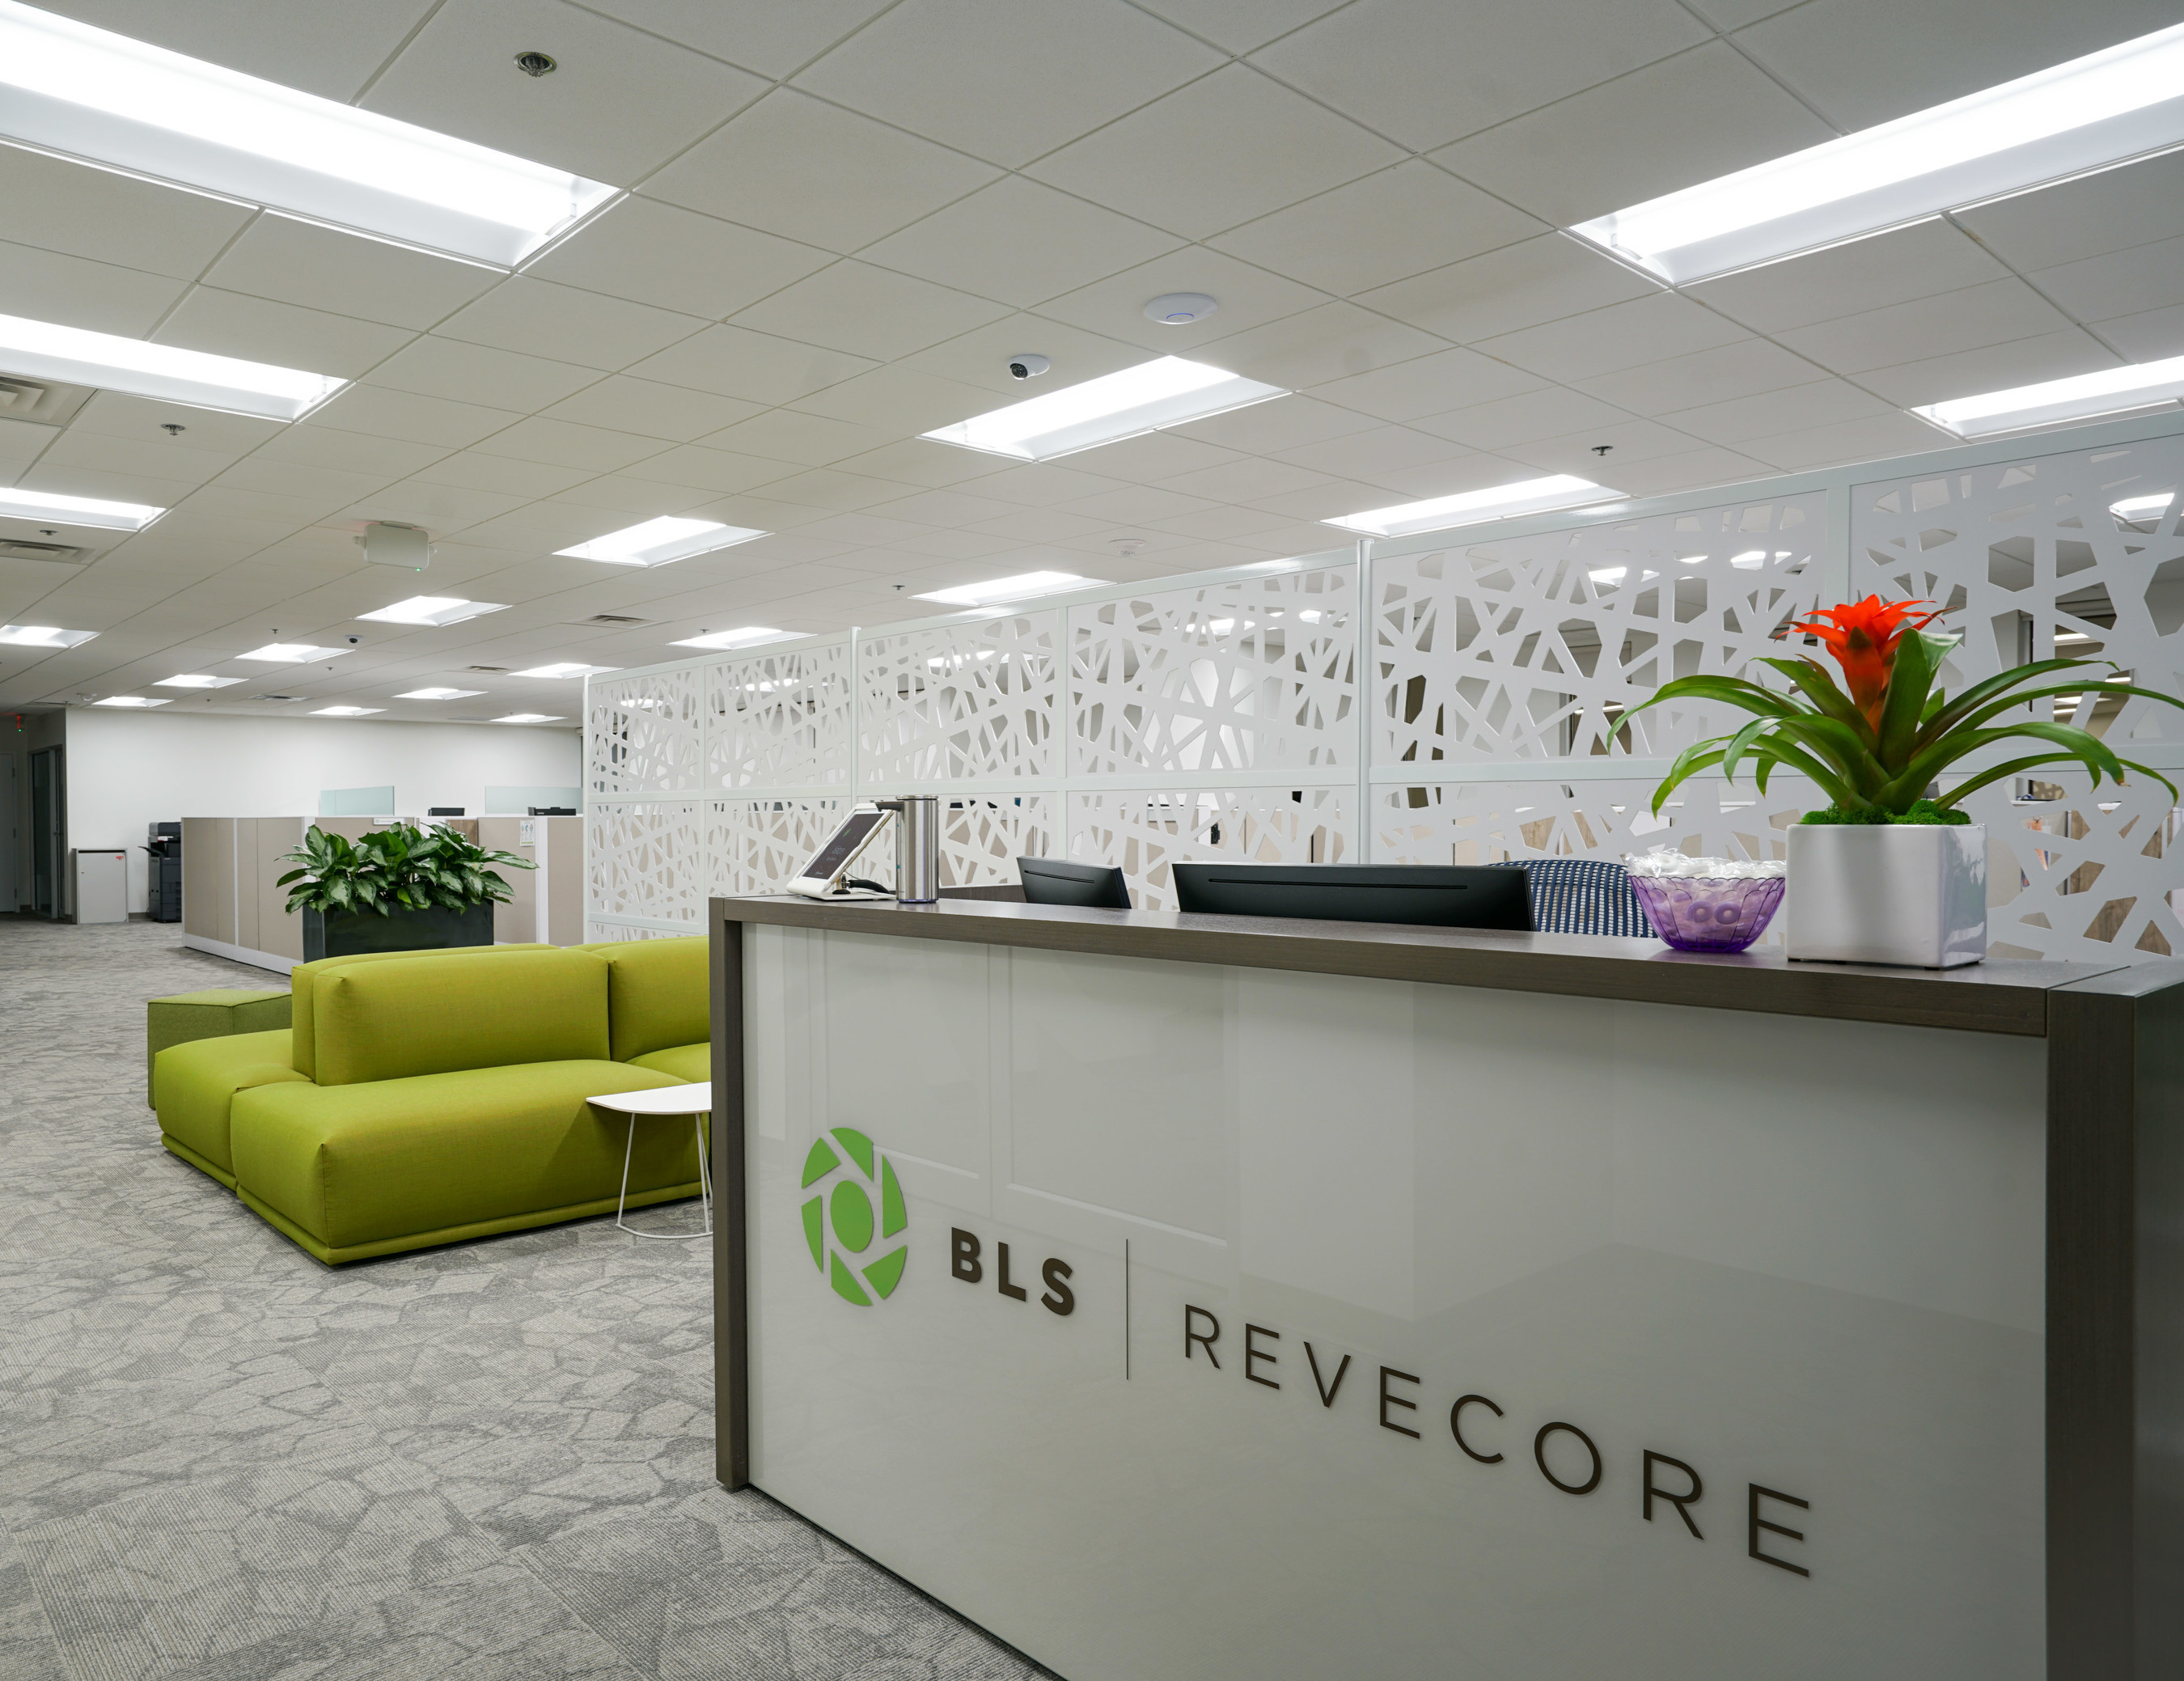 Revecore Expands To Cincinnati With The Bls Revecore Service